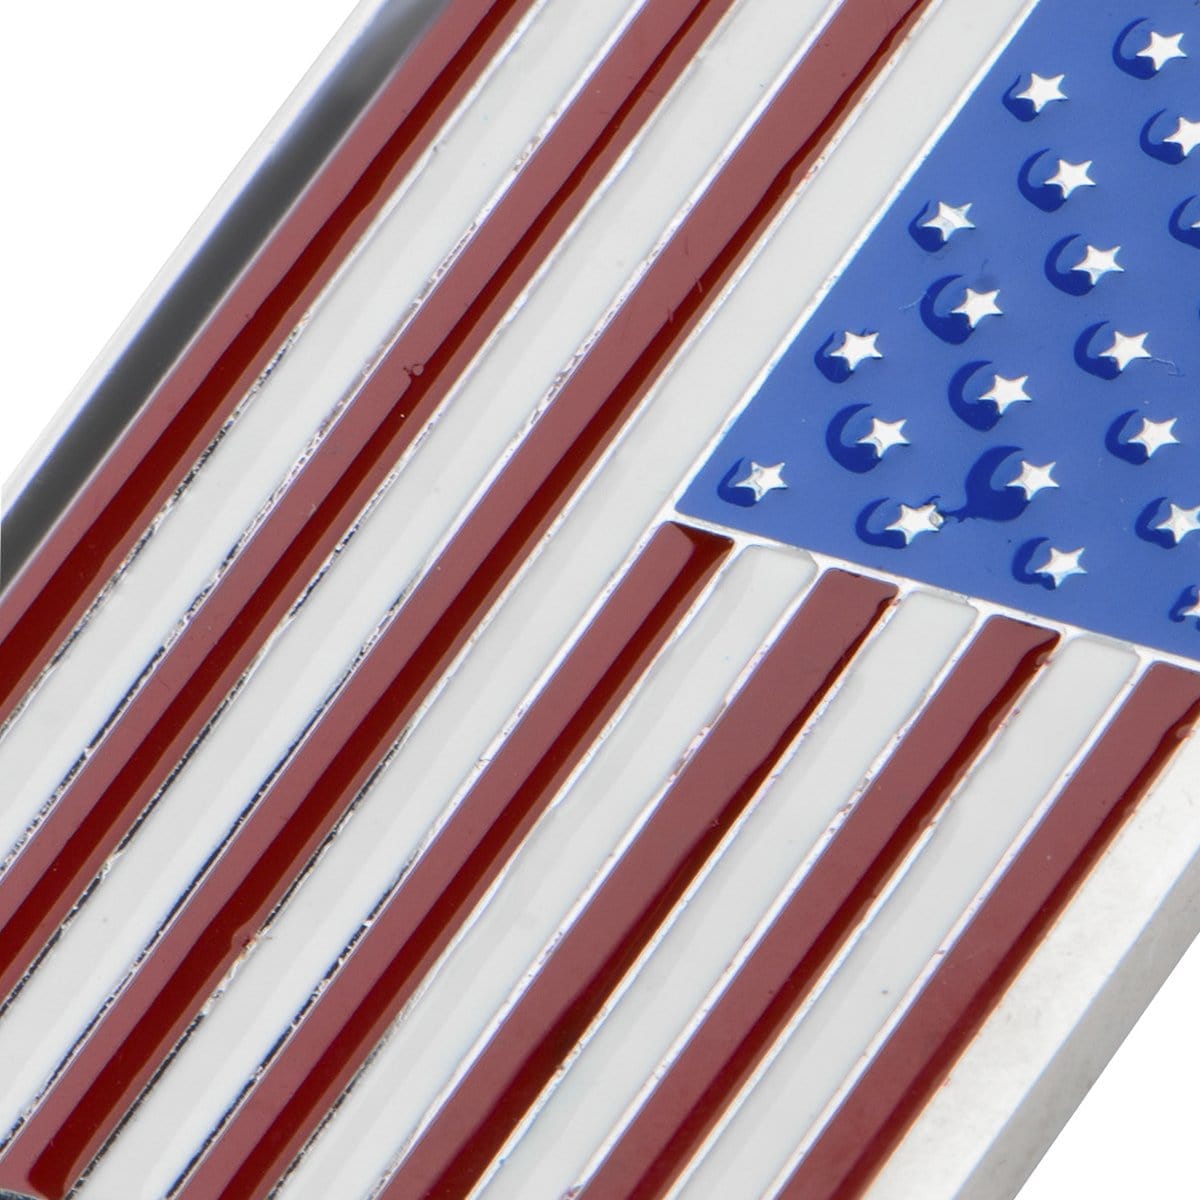 INOX JEWELRY Pendants Silver Tone Stainless Steel Enameled American Flag ID Tag Pendant SSP1030ANK